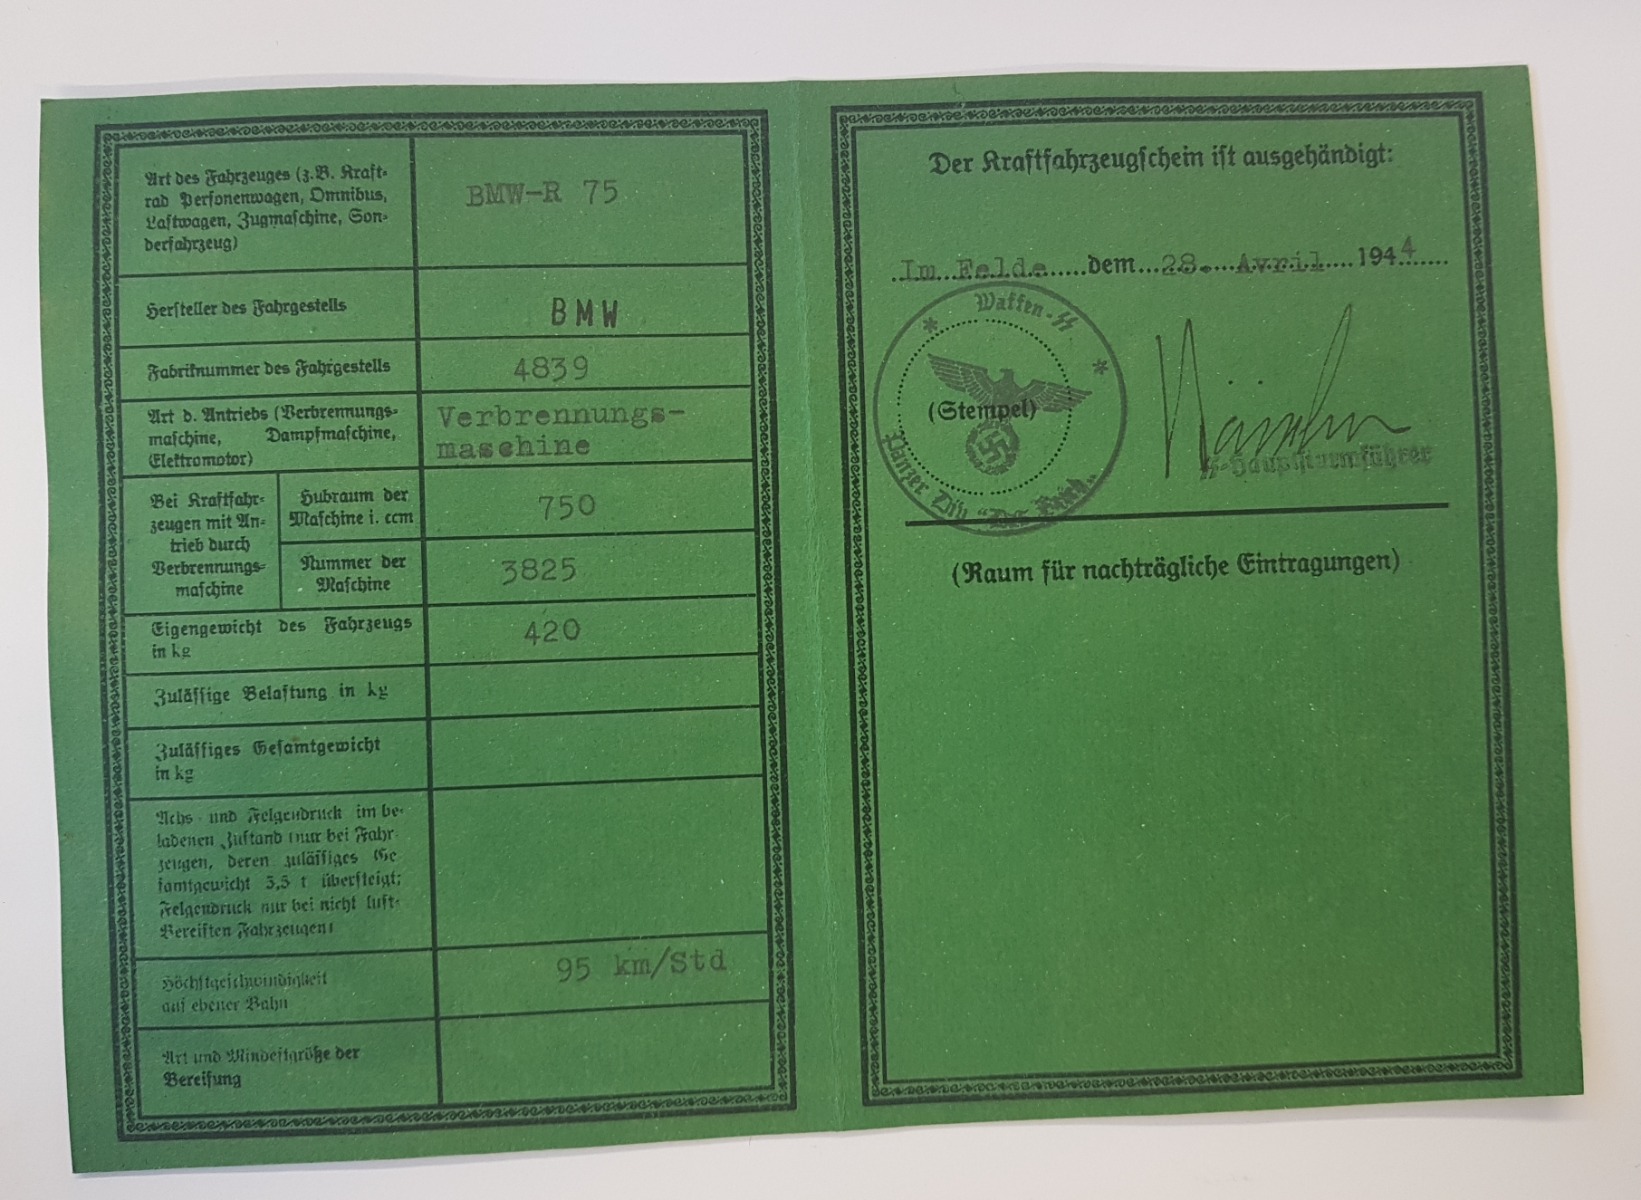 IDENTITY CARD FOR BMW-R 75 3.SS-PZ. GREN. RGT.4 DER FUHRER